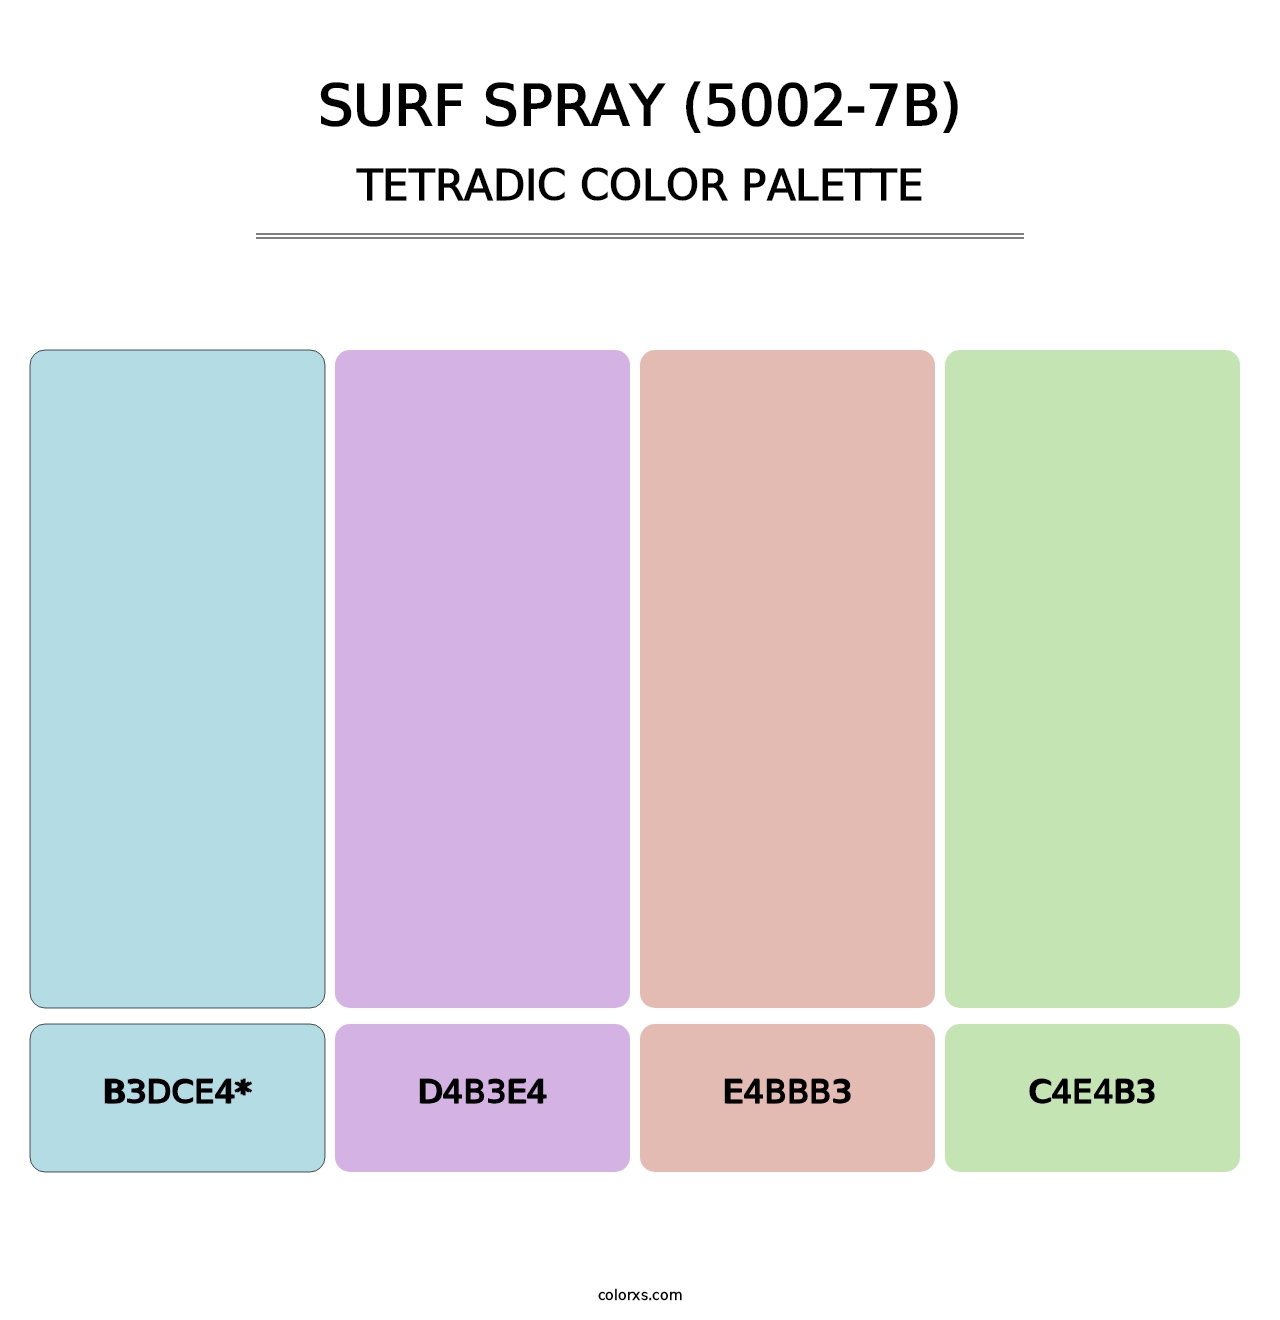 Surf Spray (5002-7B) - Tetradic Color Palette